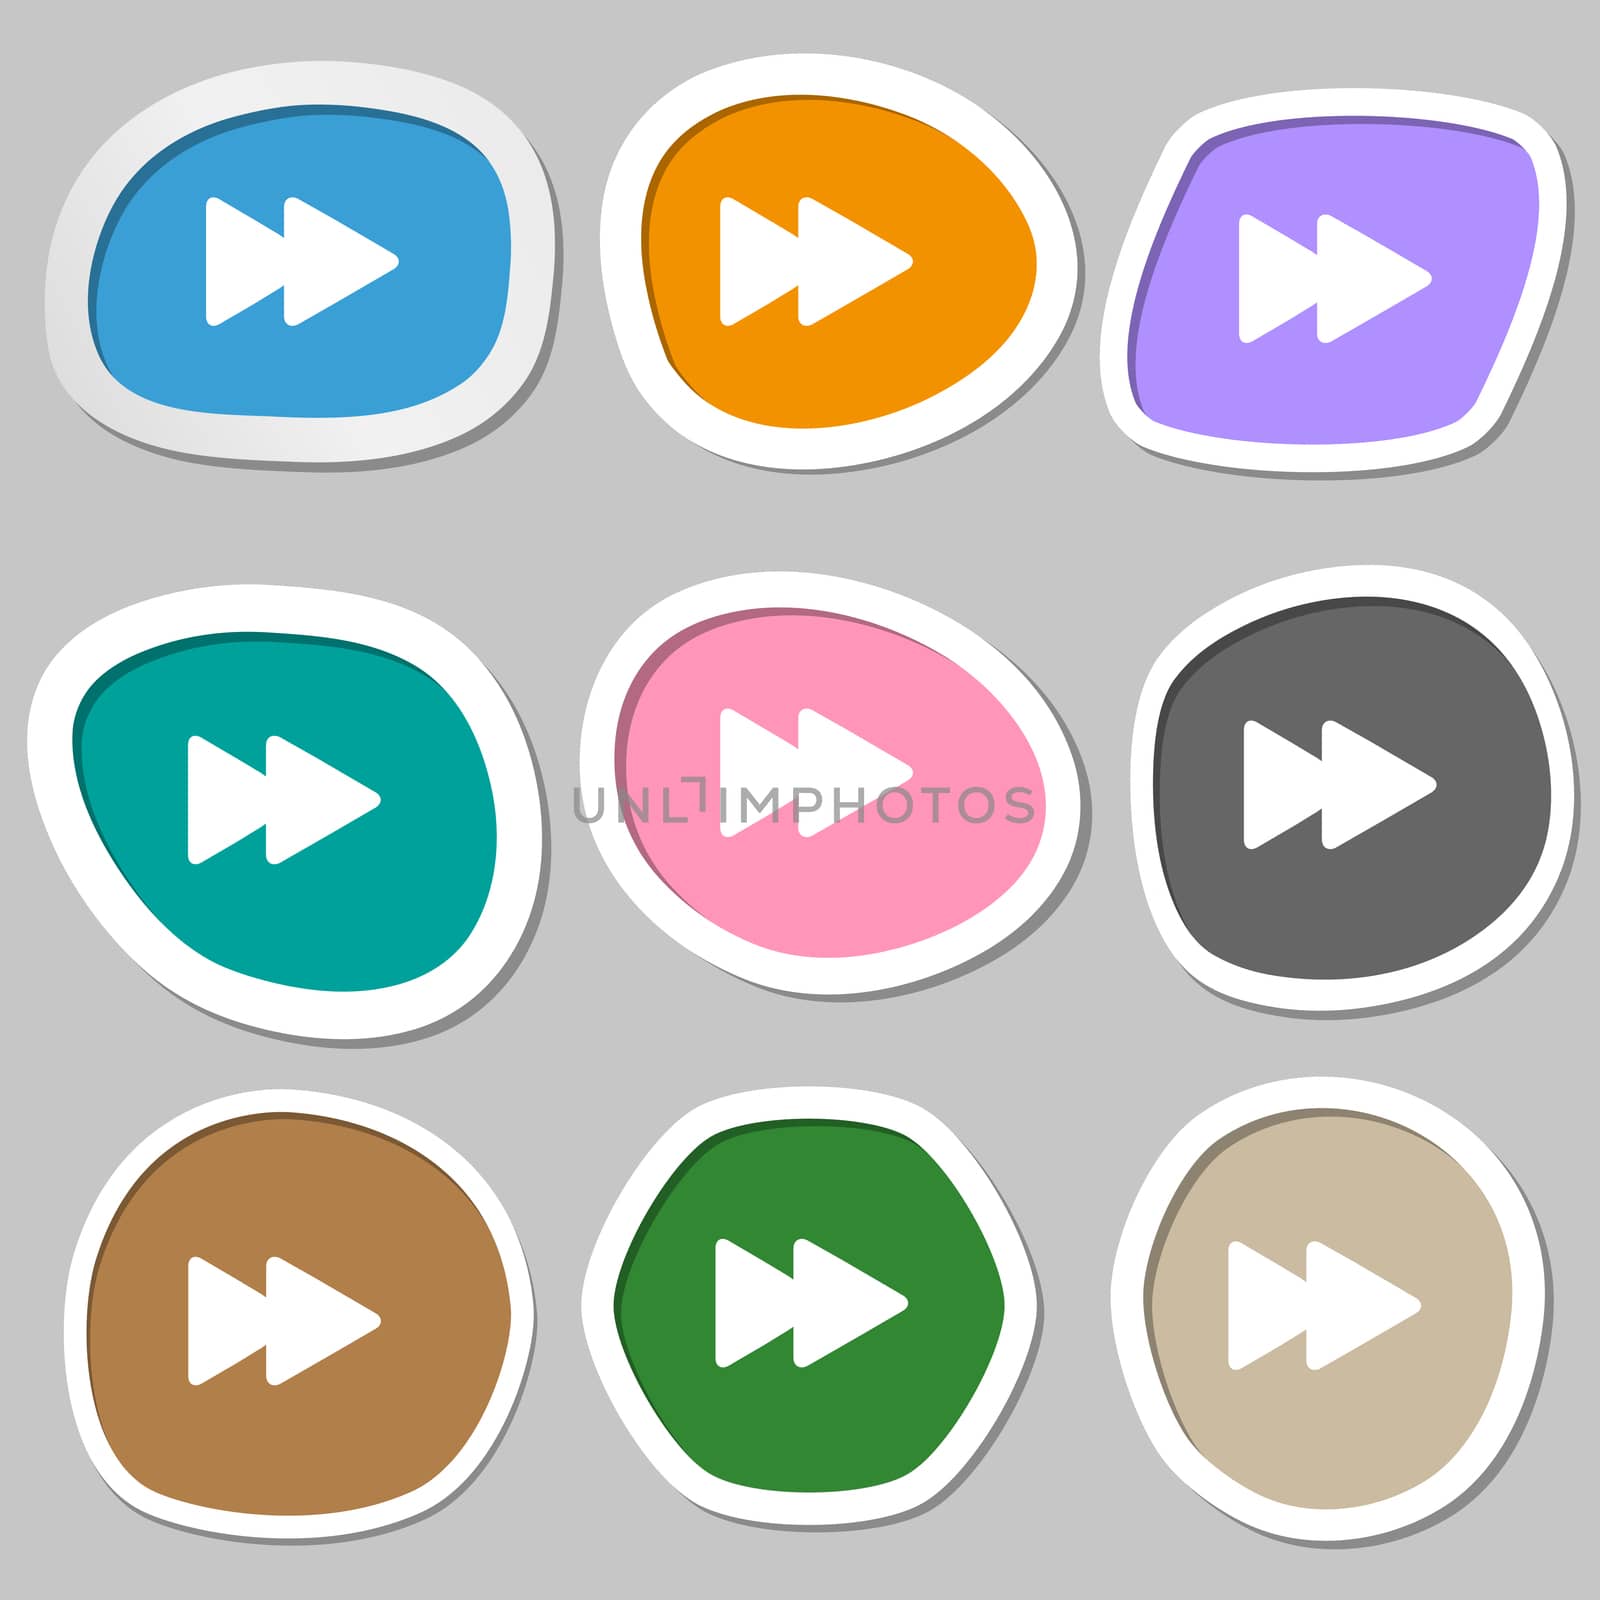 rewind icon symbols. Multicolored paper stickers.  by serhii_lohvyniuk